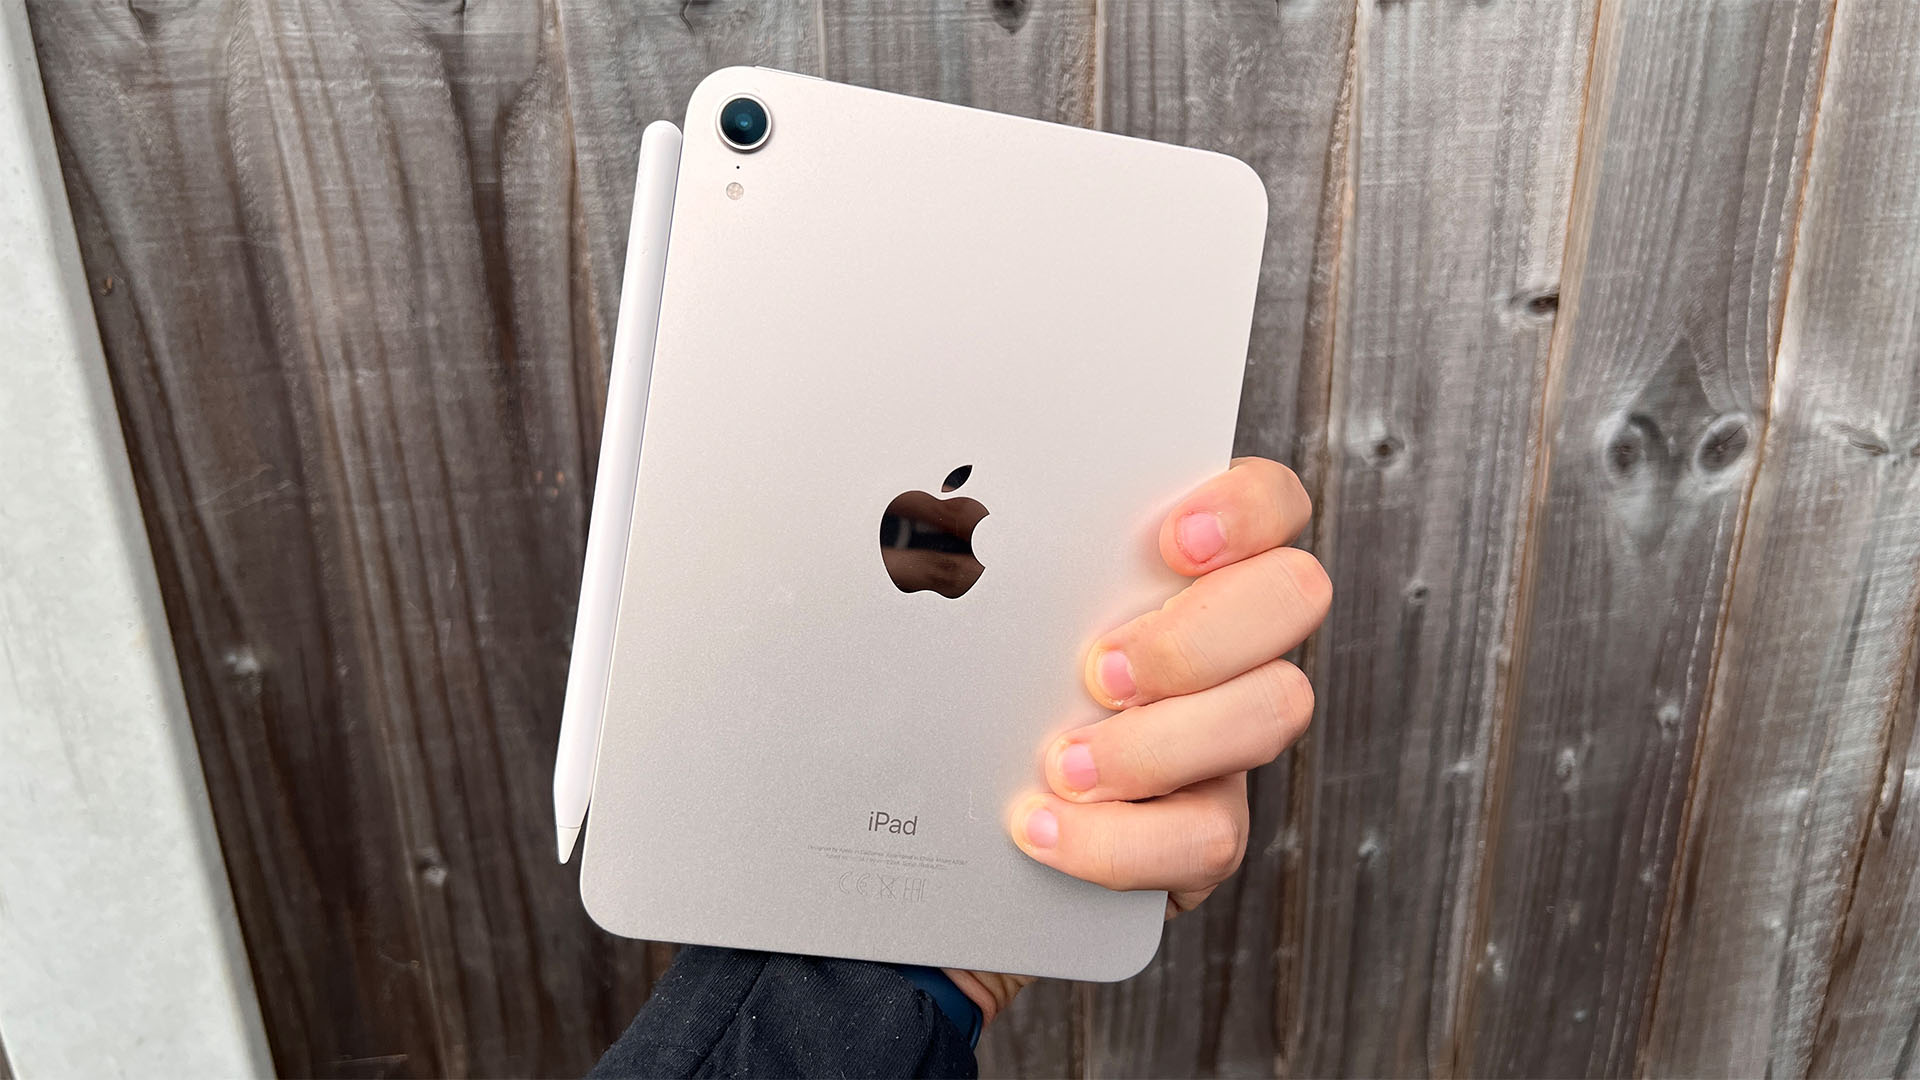 Close up photos of the iPad Mini (2021) tablet